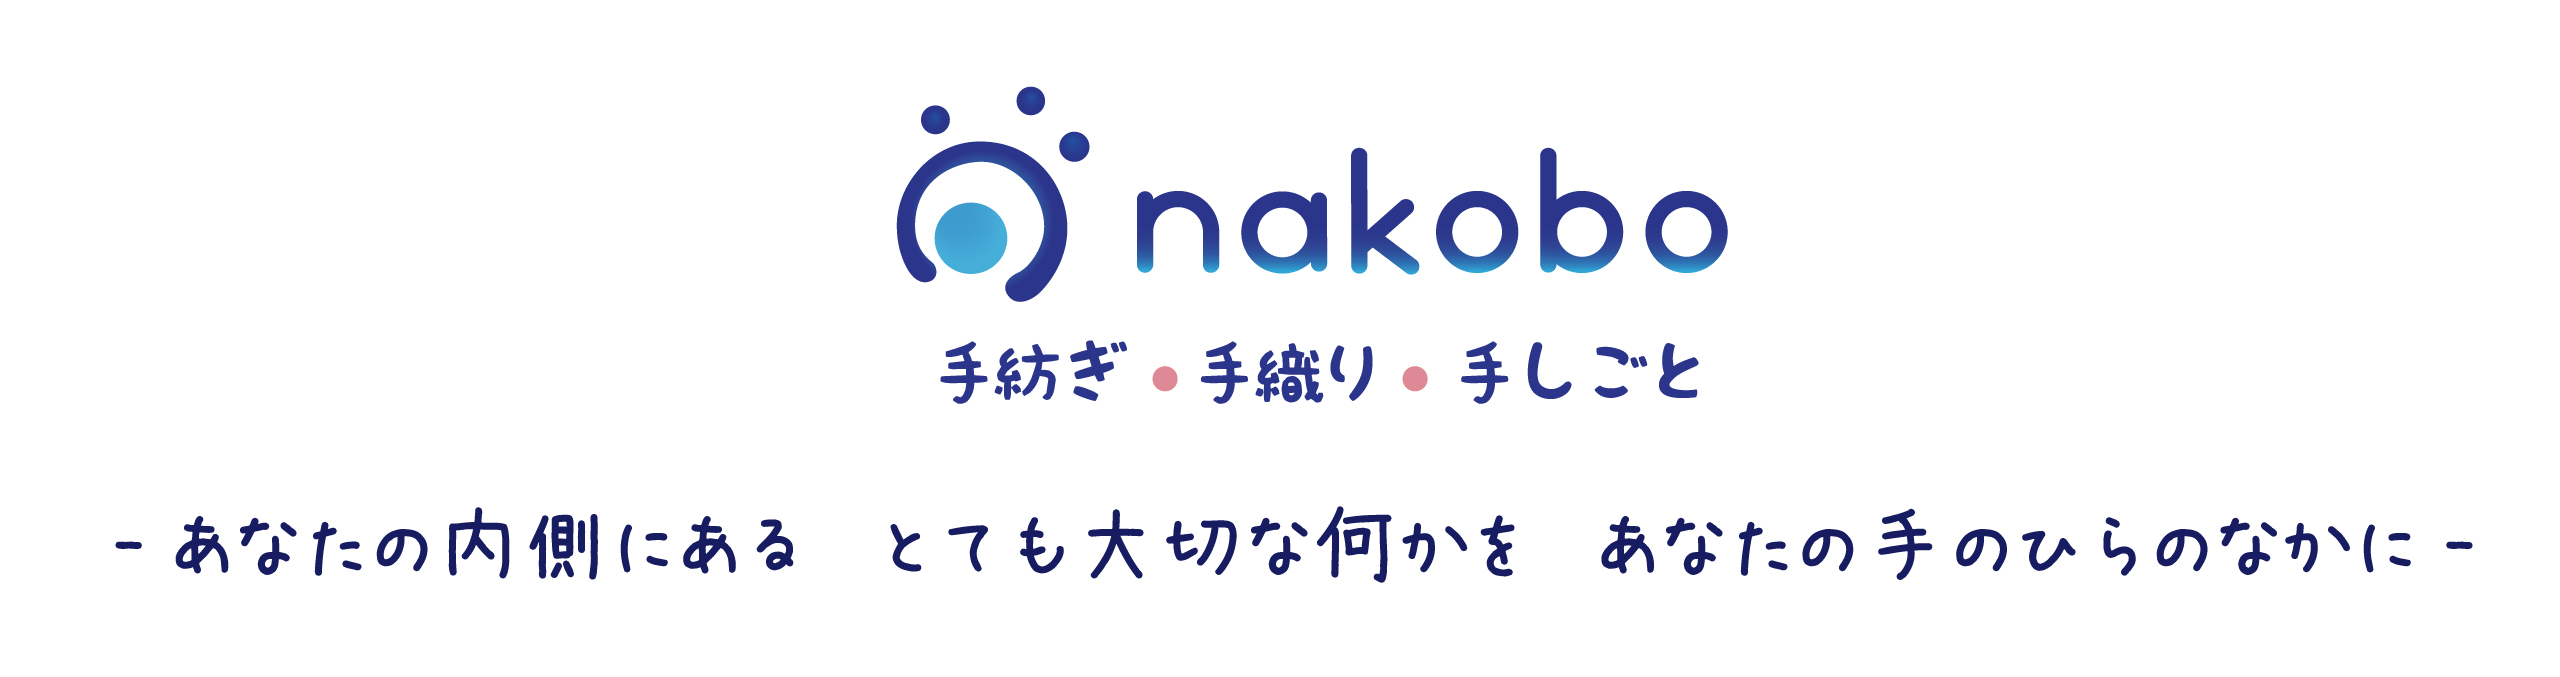 nakobo_logo